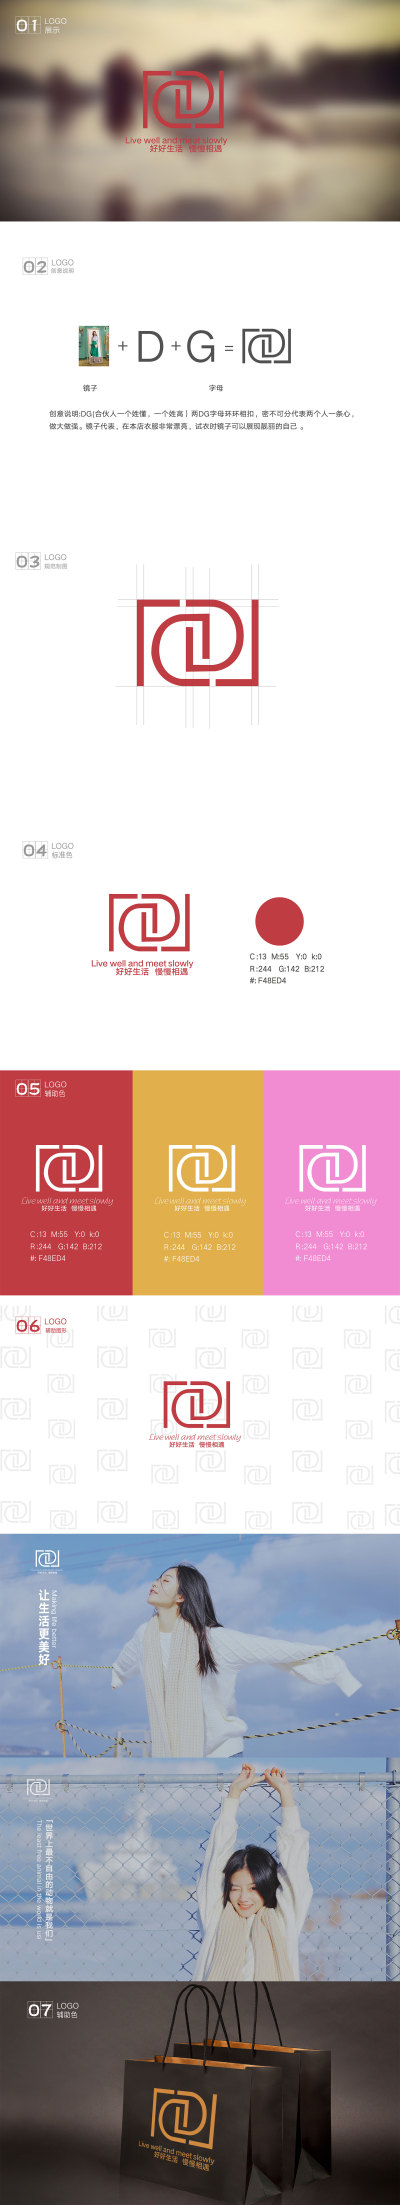 “DG”女装服装店Logo升级